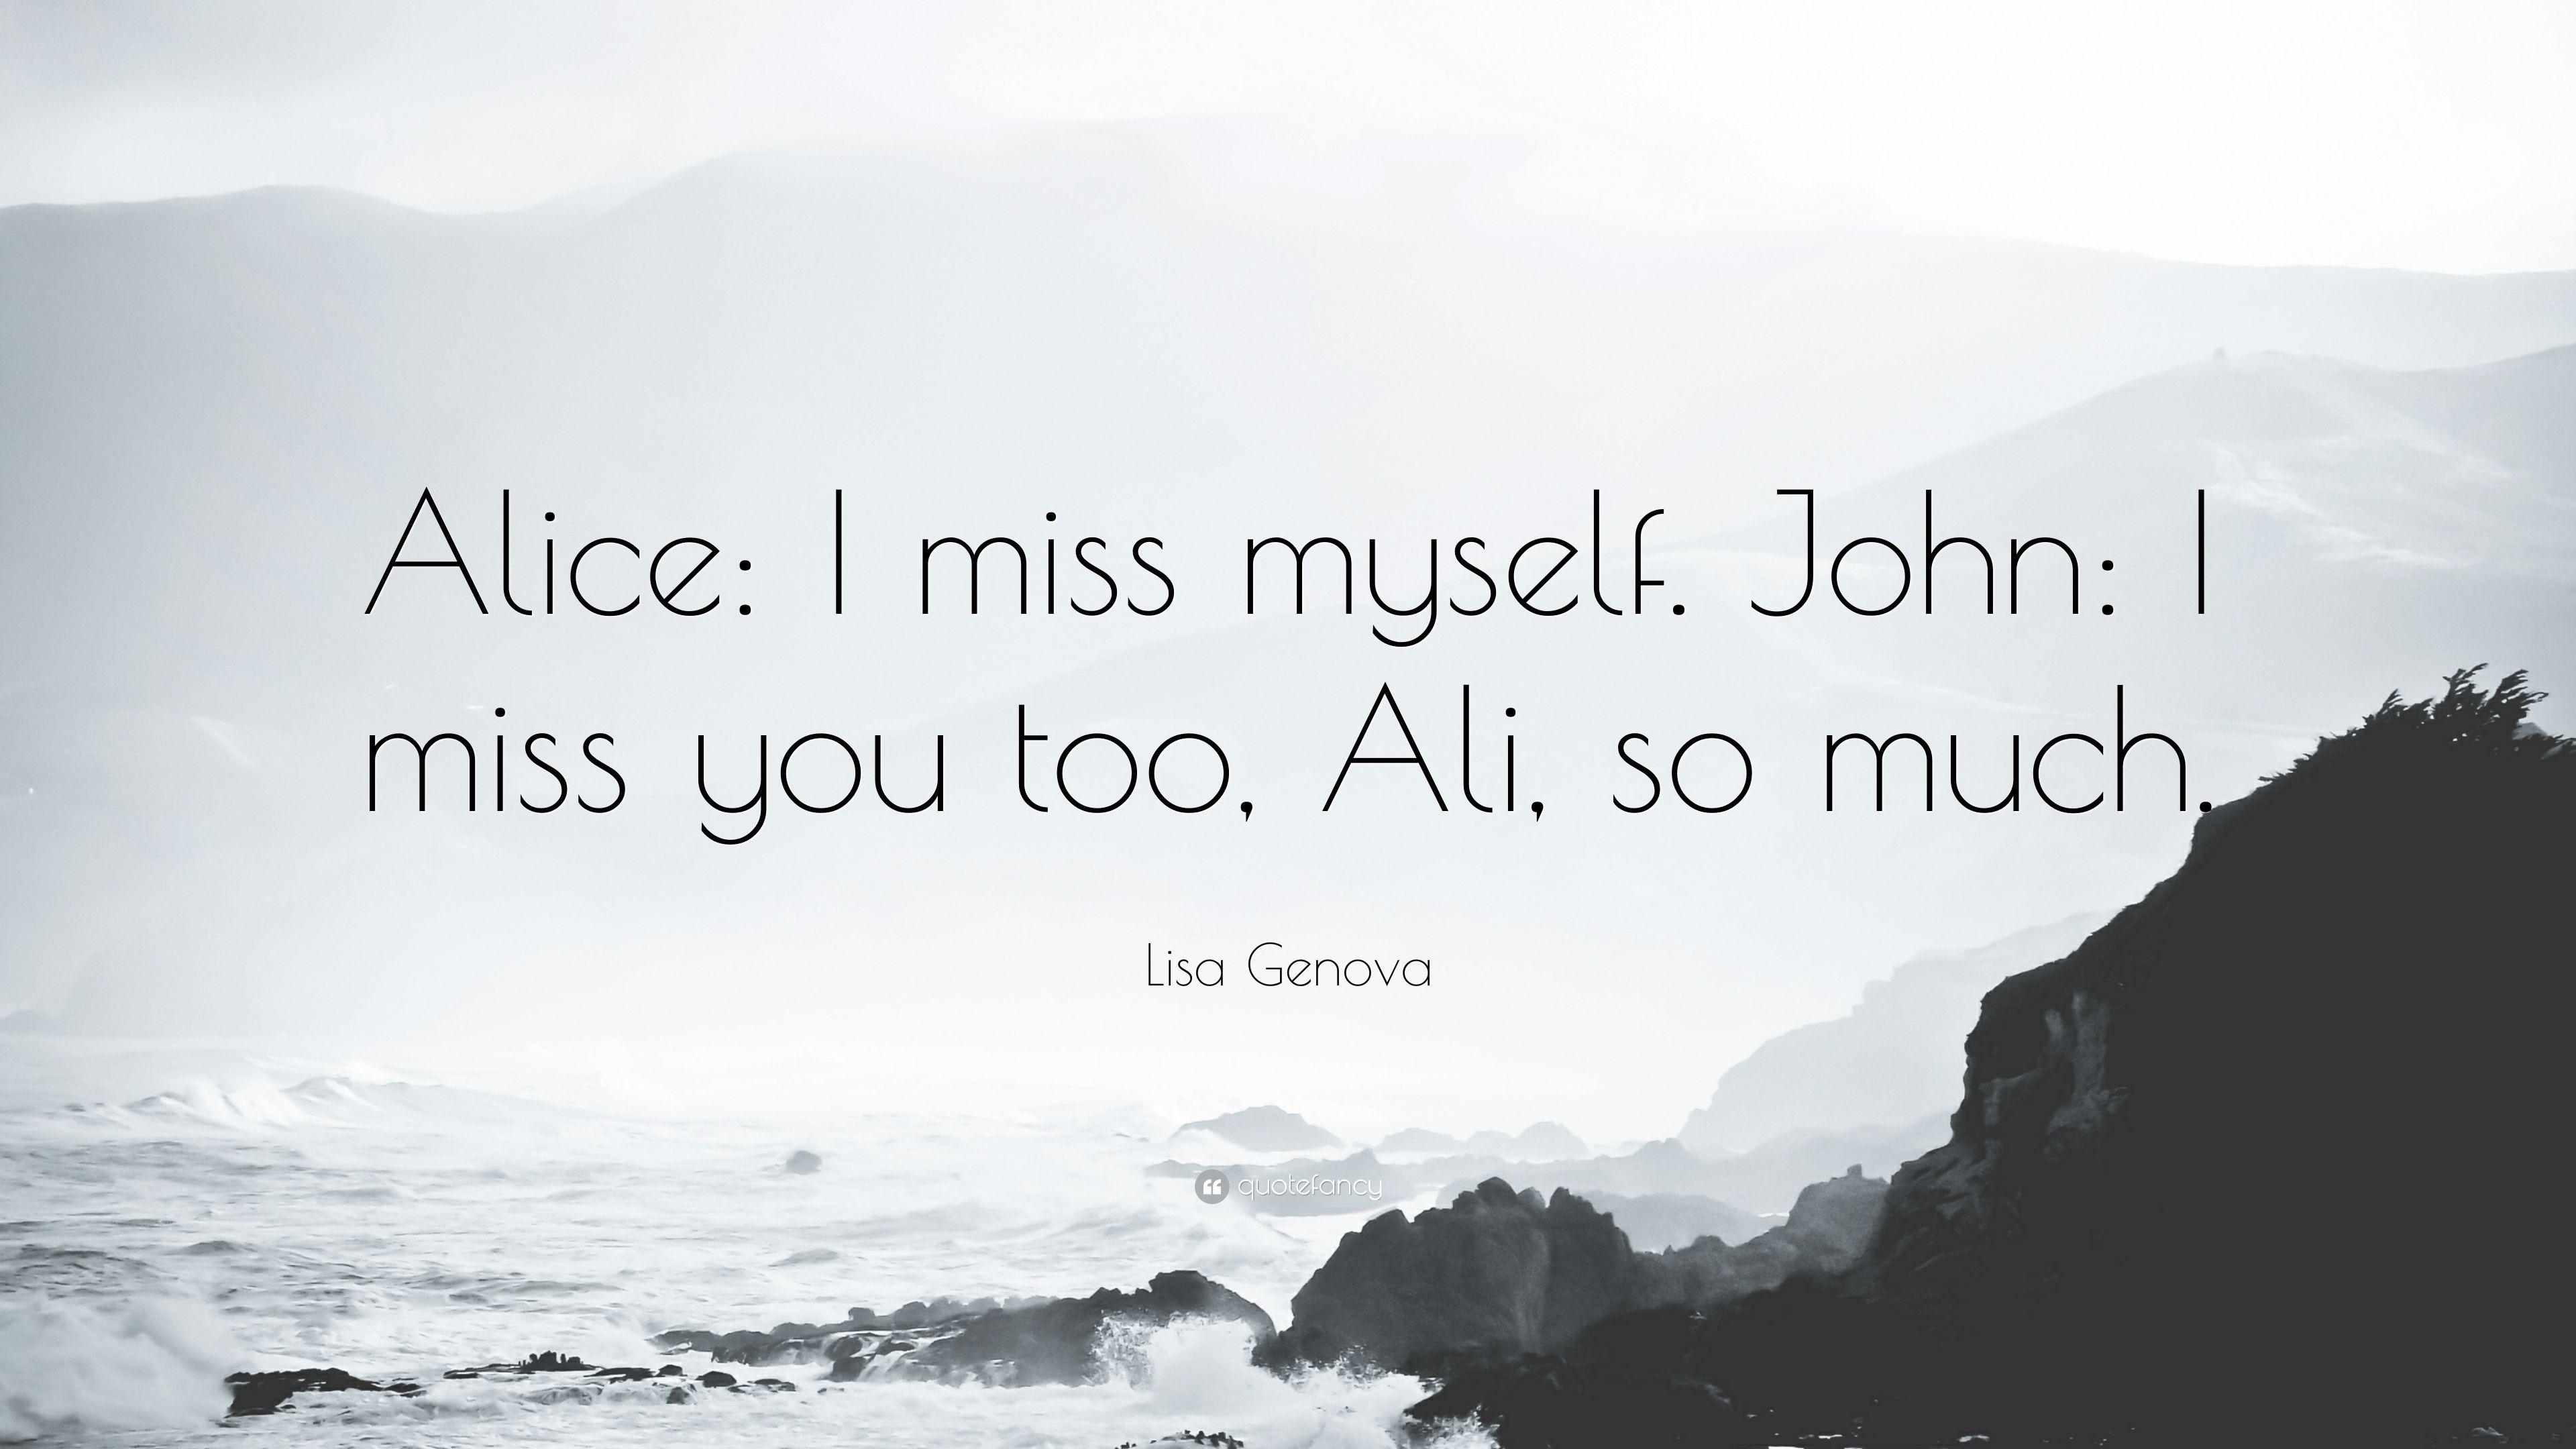 Lisa Genova Quote: “Alice: I miss myself. John: I miss you too, Ali